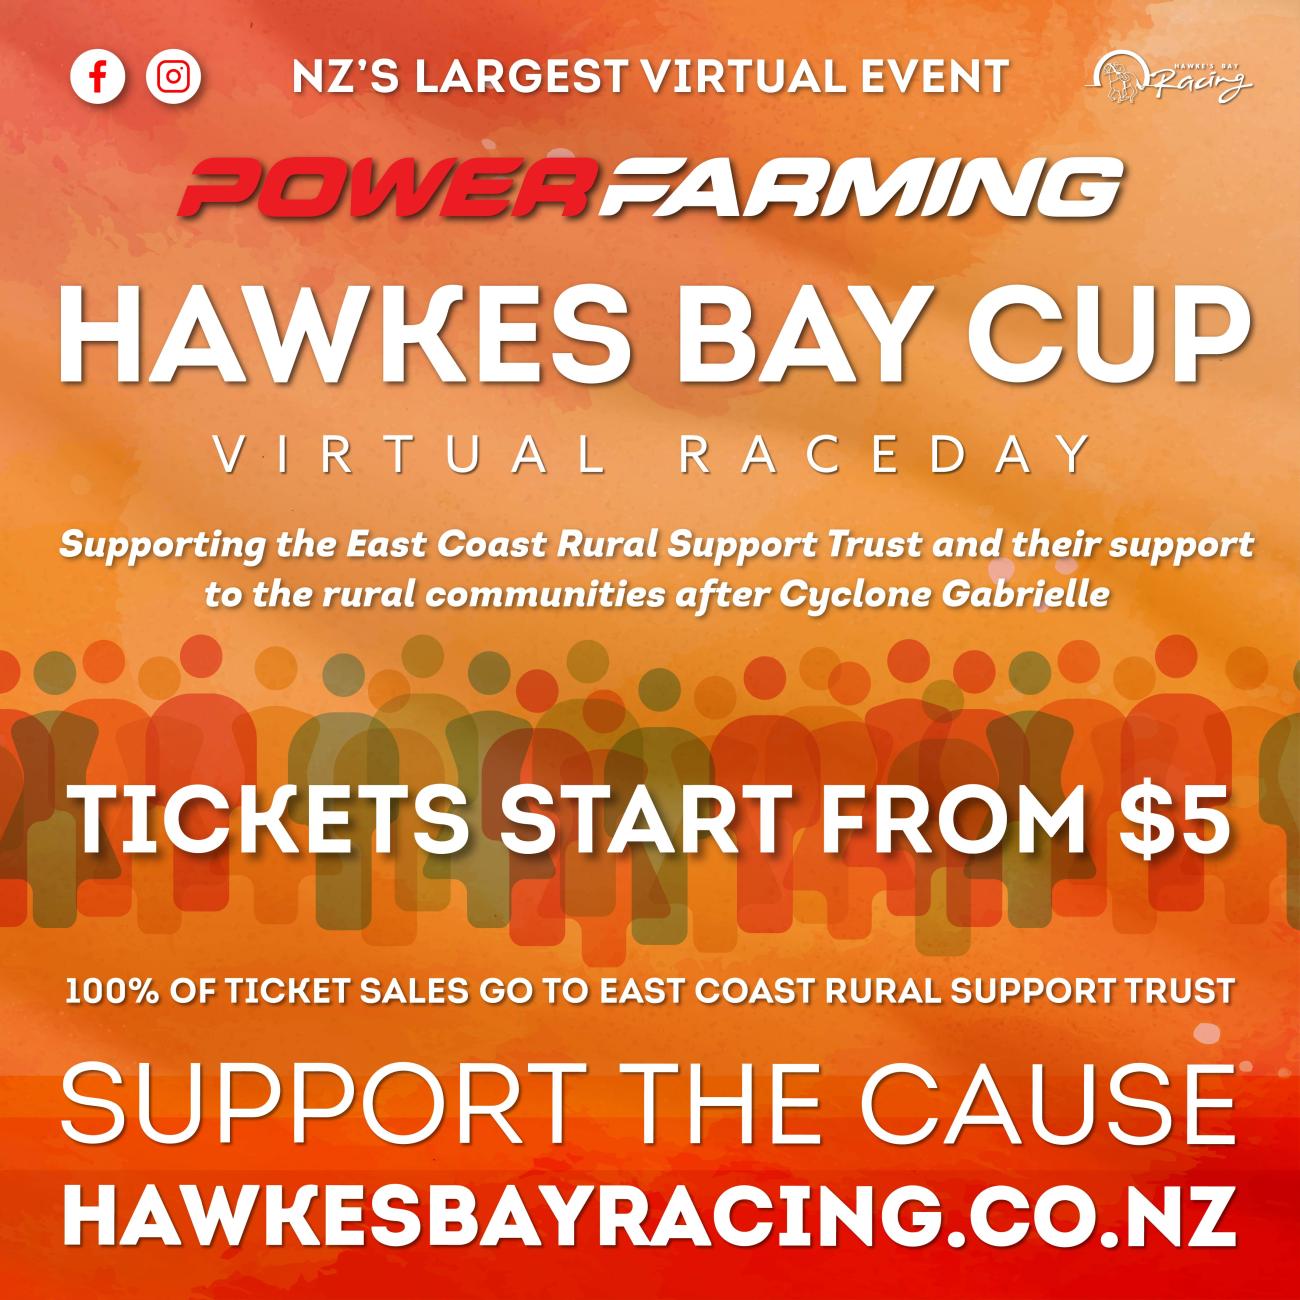 Hawke's Bay Cup Fundraiser